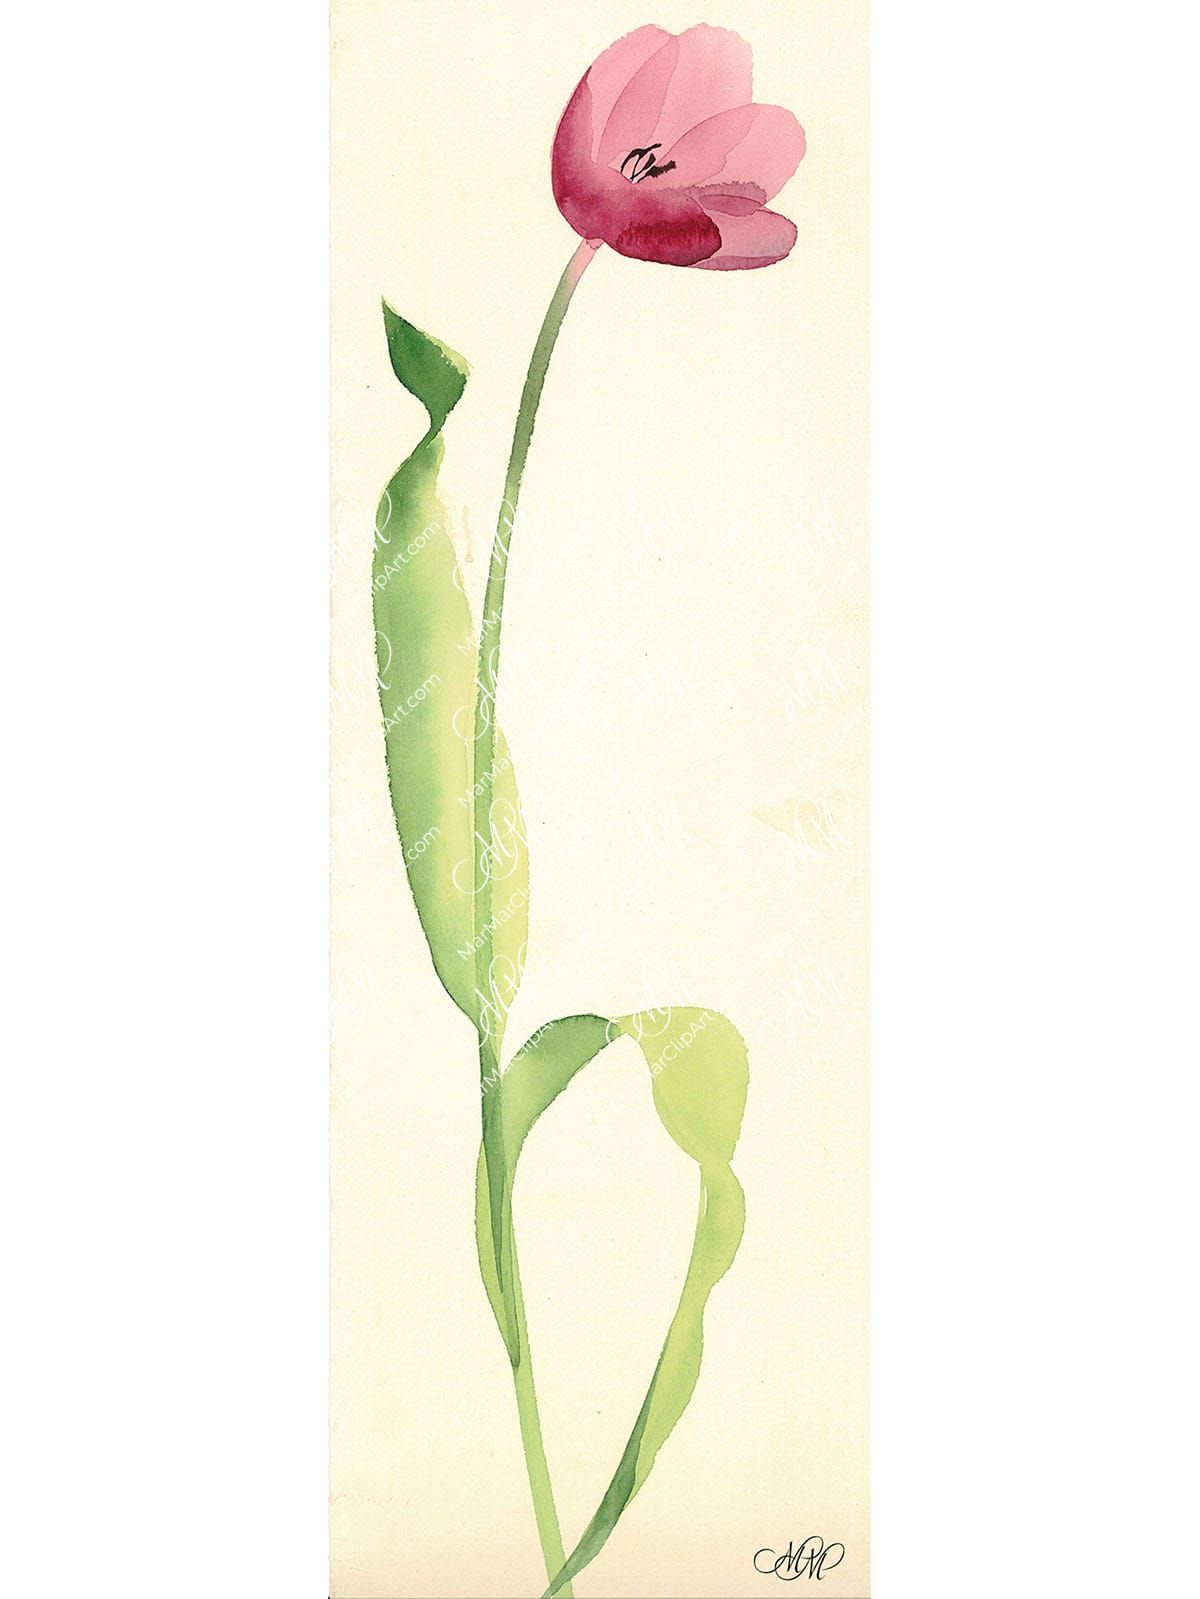 Tulip. Watercolor. 28x84cm. Tulipan.jpg 25Mb. RGB. 300 px. Instant download.